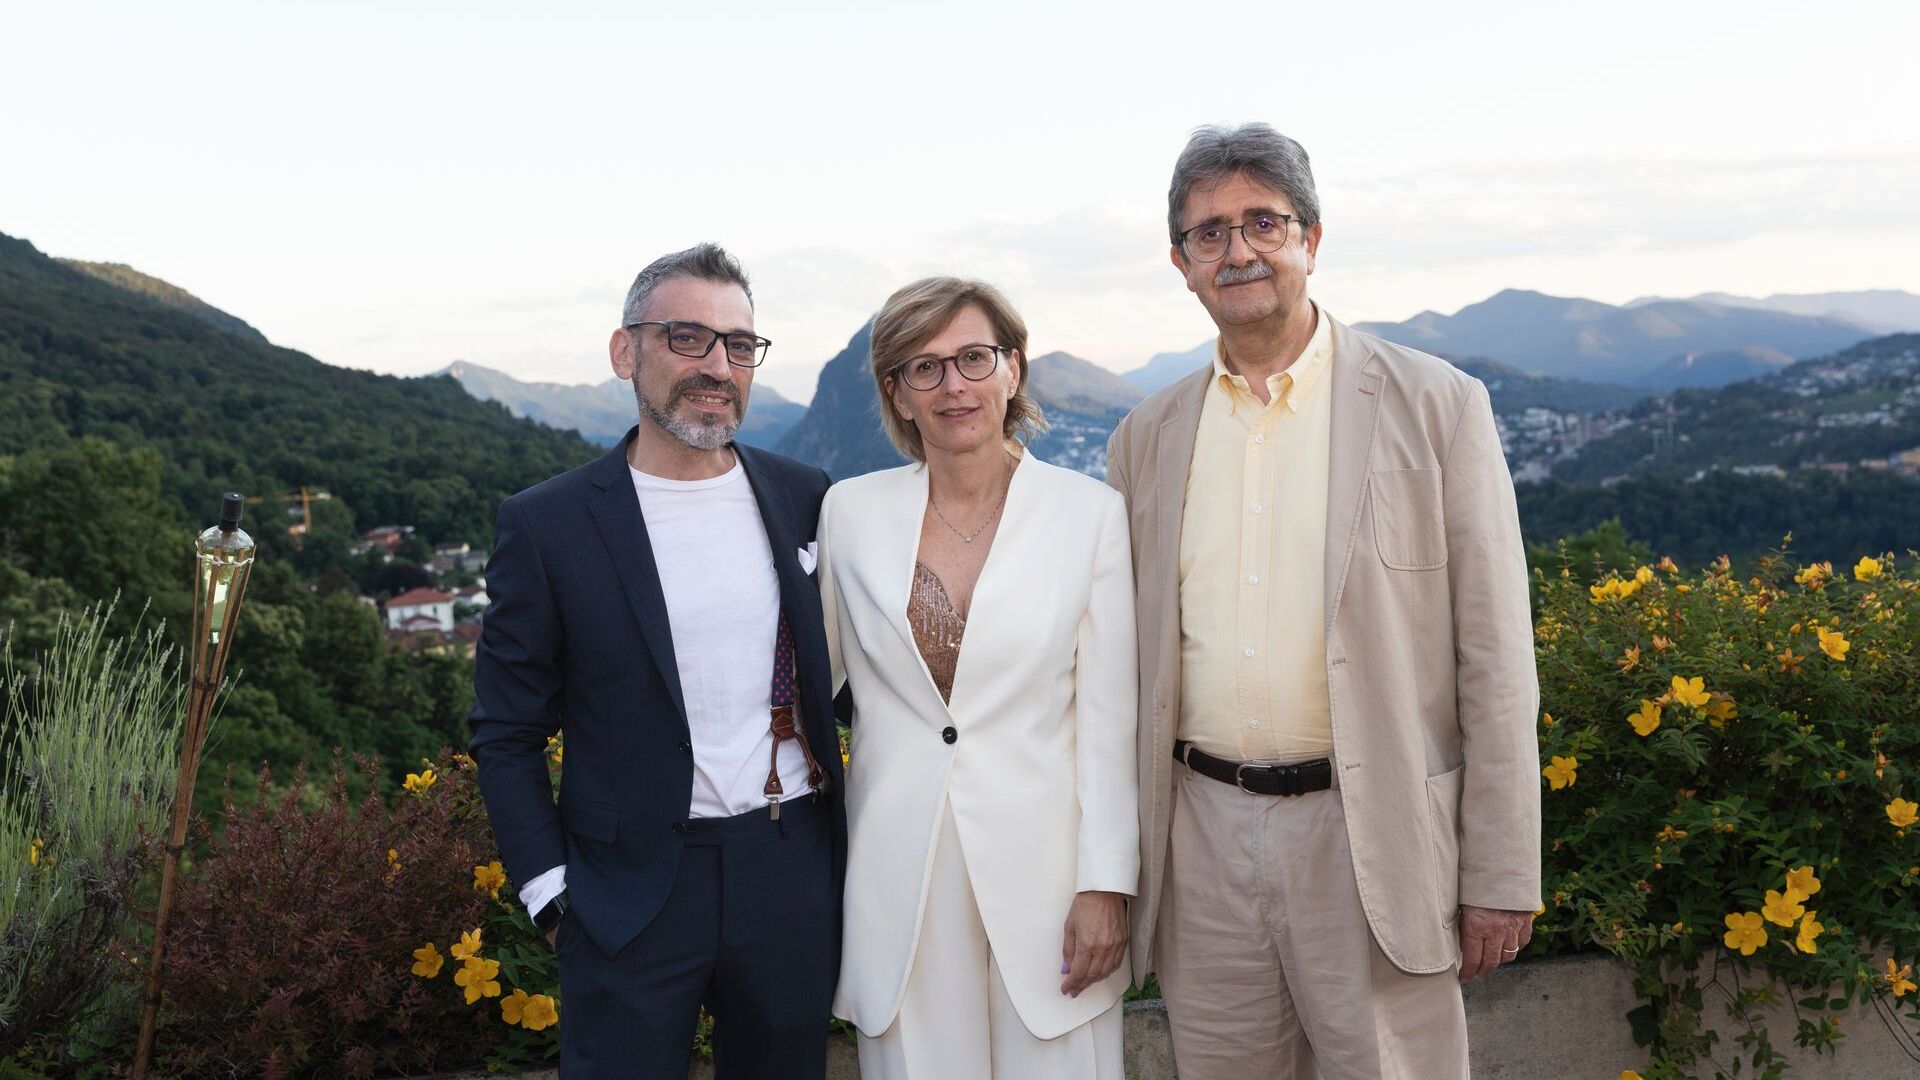 Luca Mauriello a Cristina Giotto, respektíve viceprezident a prezident ated-ICT Ticino, s partnerom Silvano Marioni